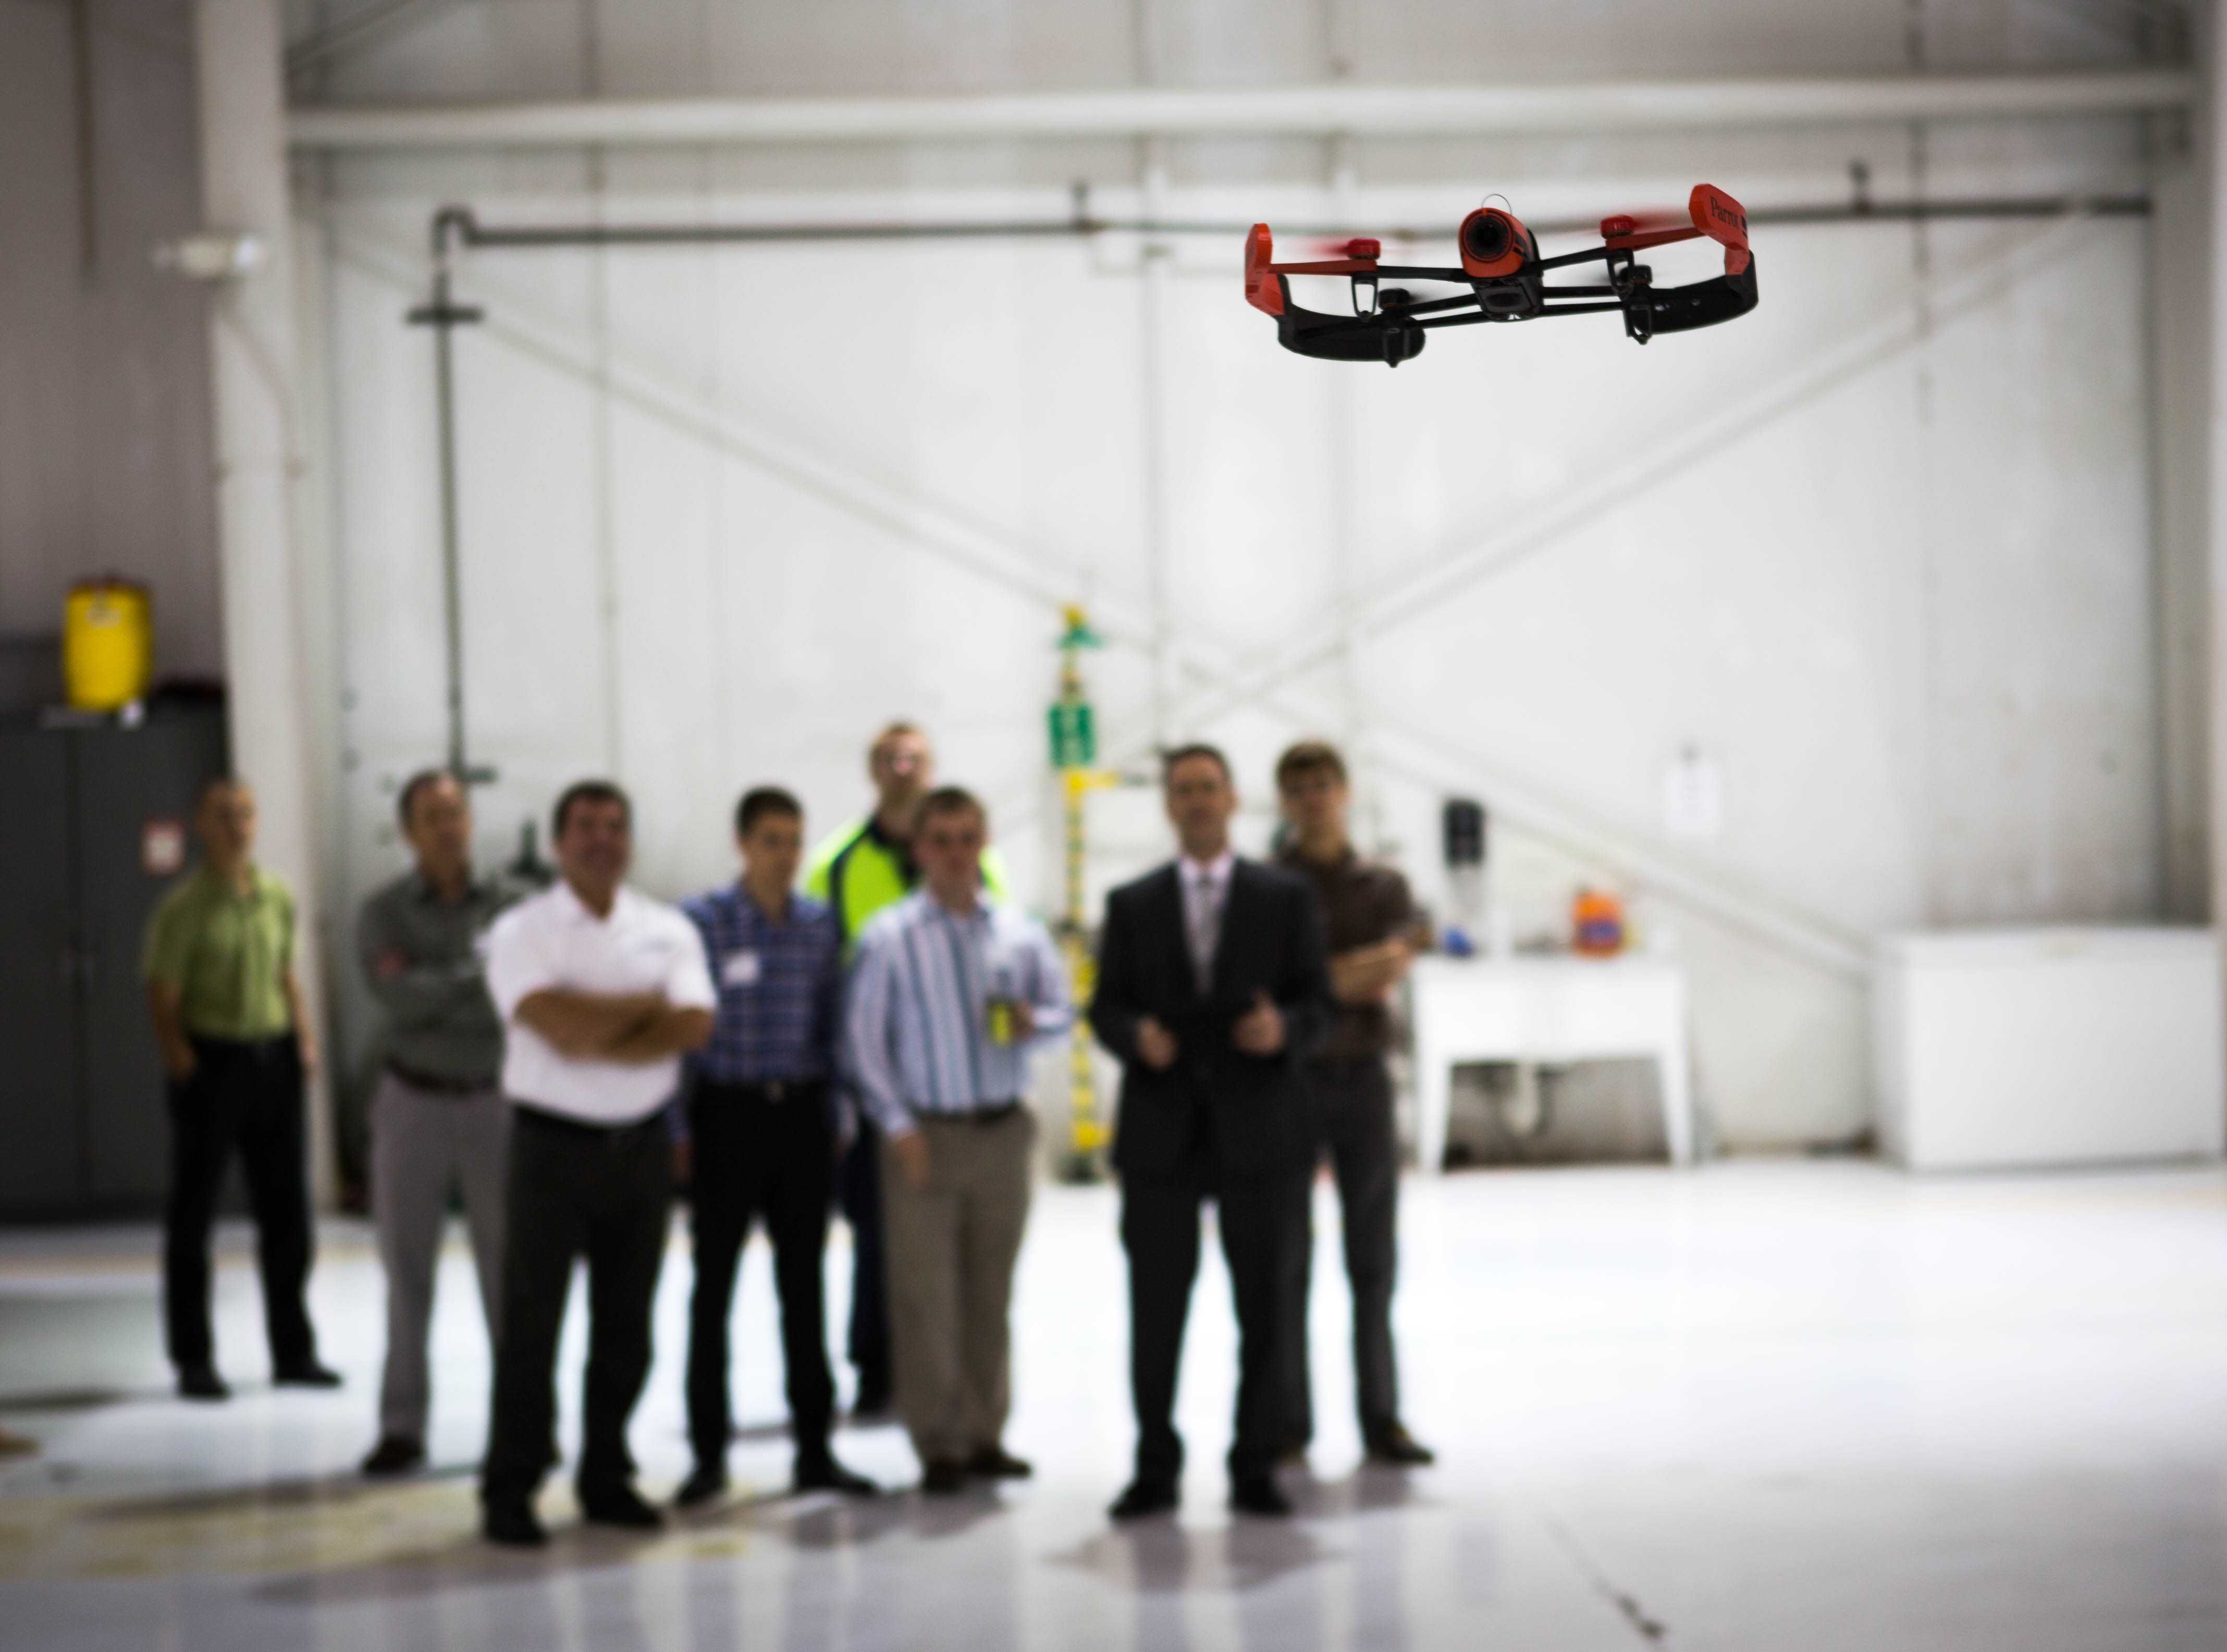 Vortex Drone session, 5/30/15 at Atlantic Aviation, PWK.